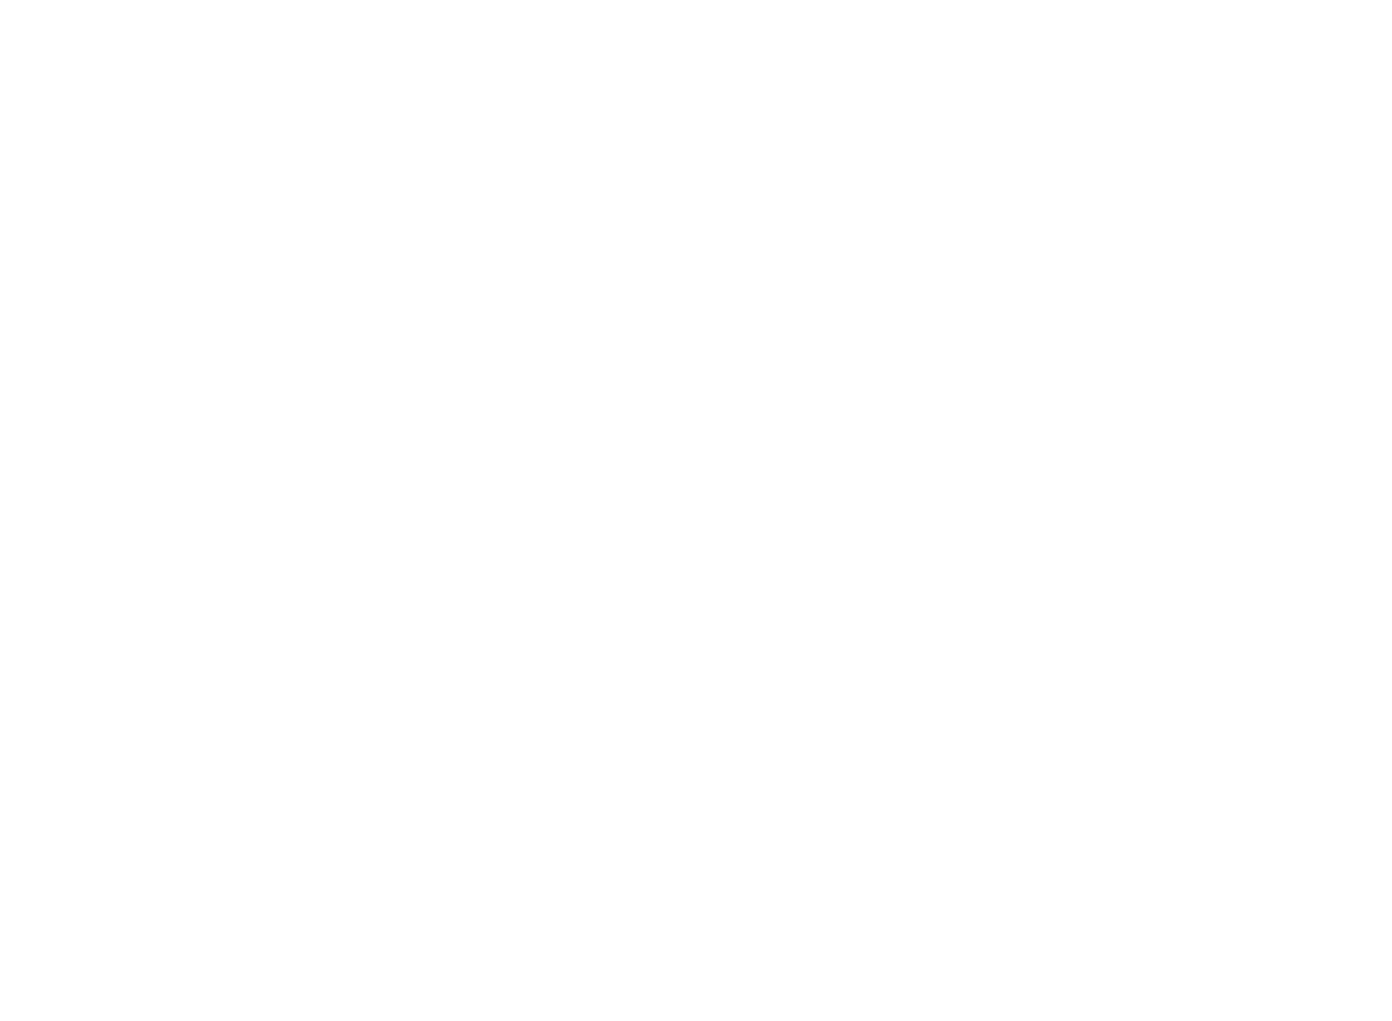 Danny is Fantastic